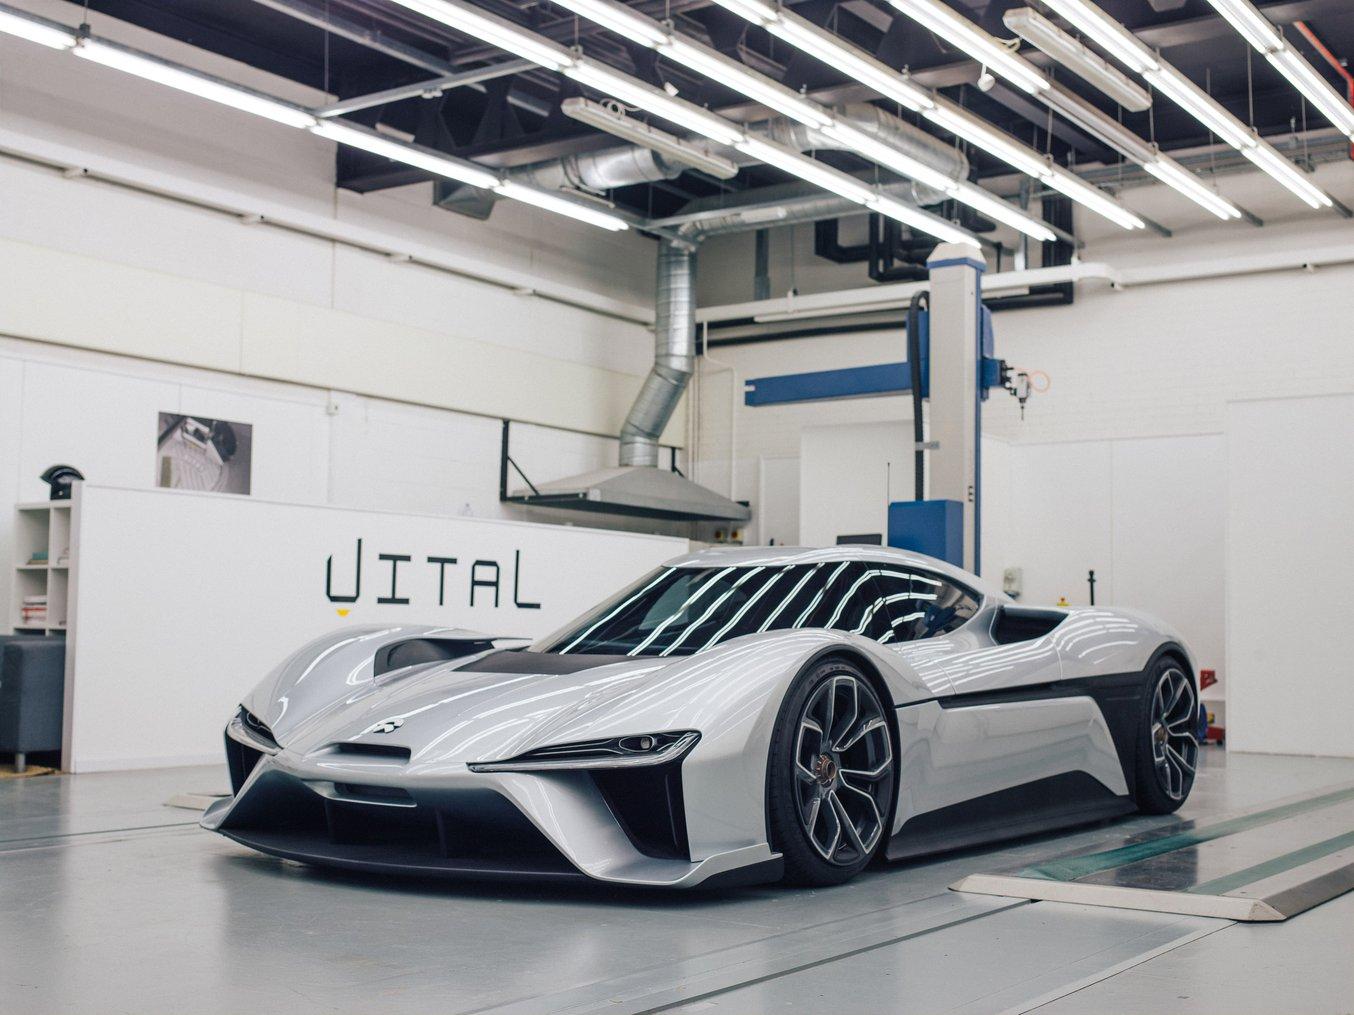 A stylish white concept car in a garage.